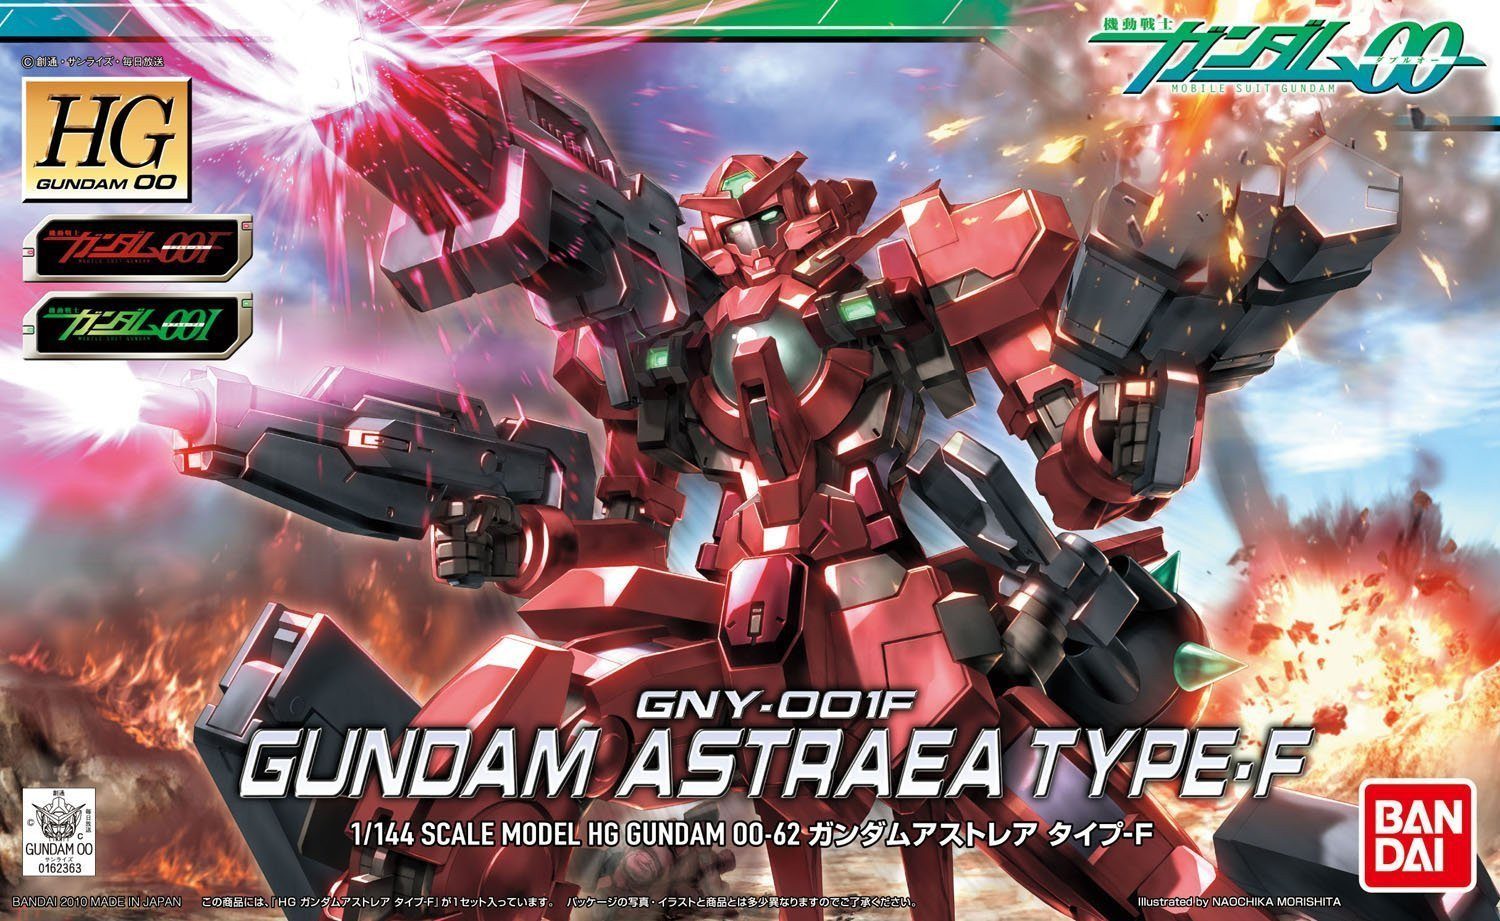 HG00 - GNY-001F Gundam Astraea Type F